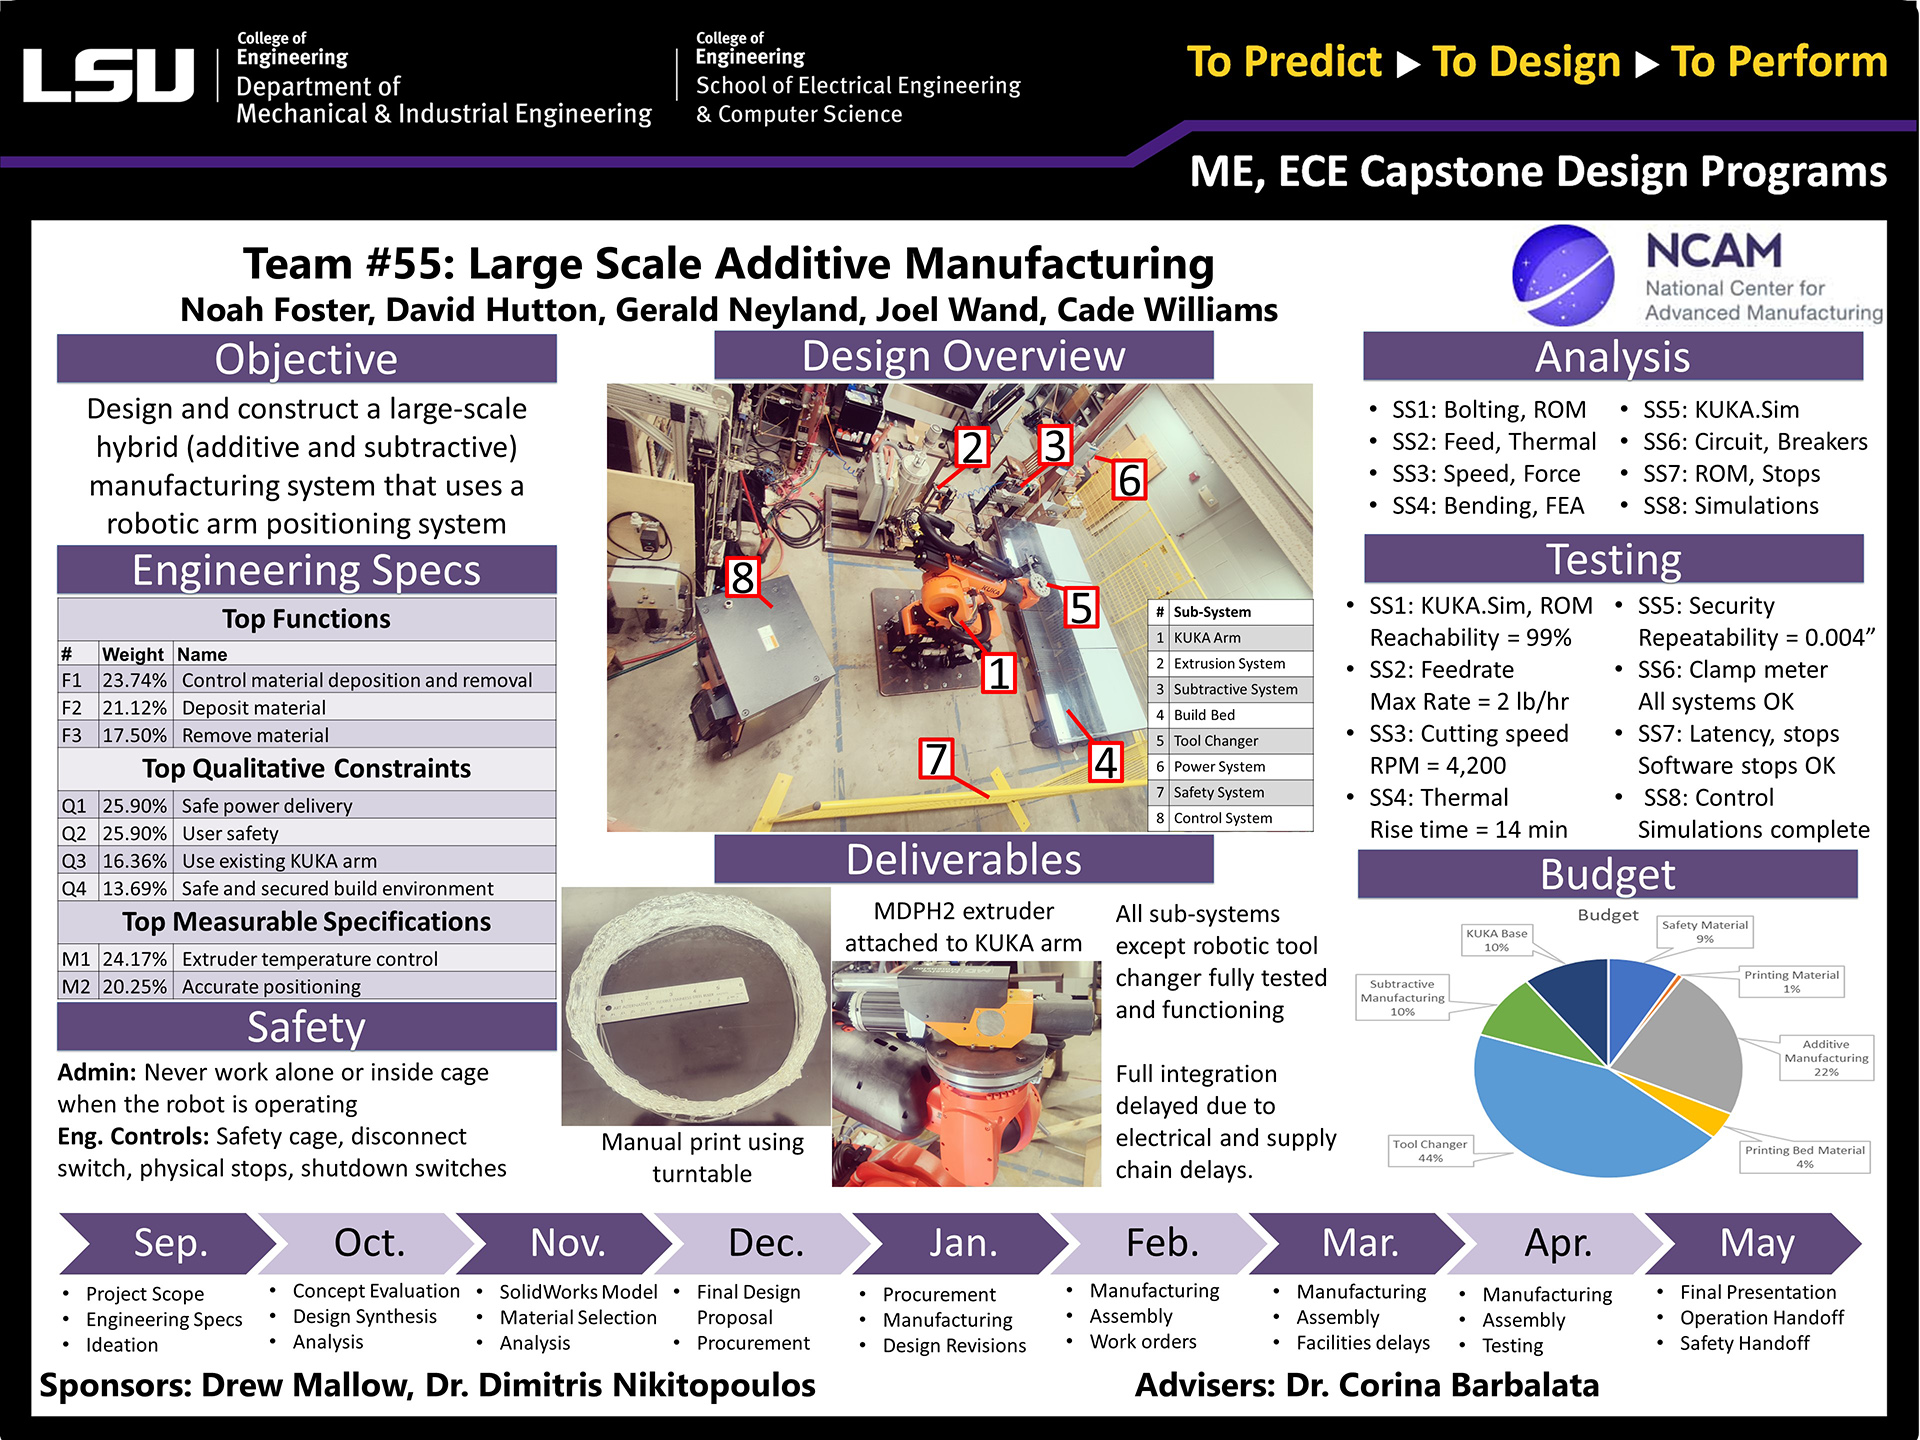 Capstone Design Gallery 2022 | LSU Mechanical & Industrial Engineering